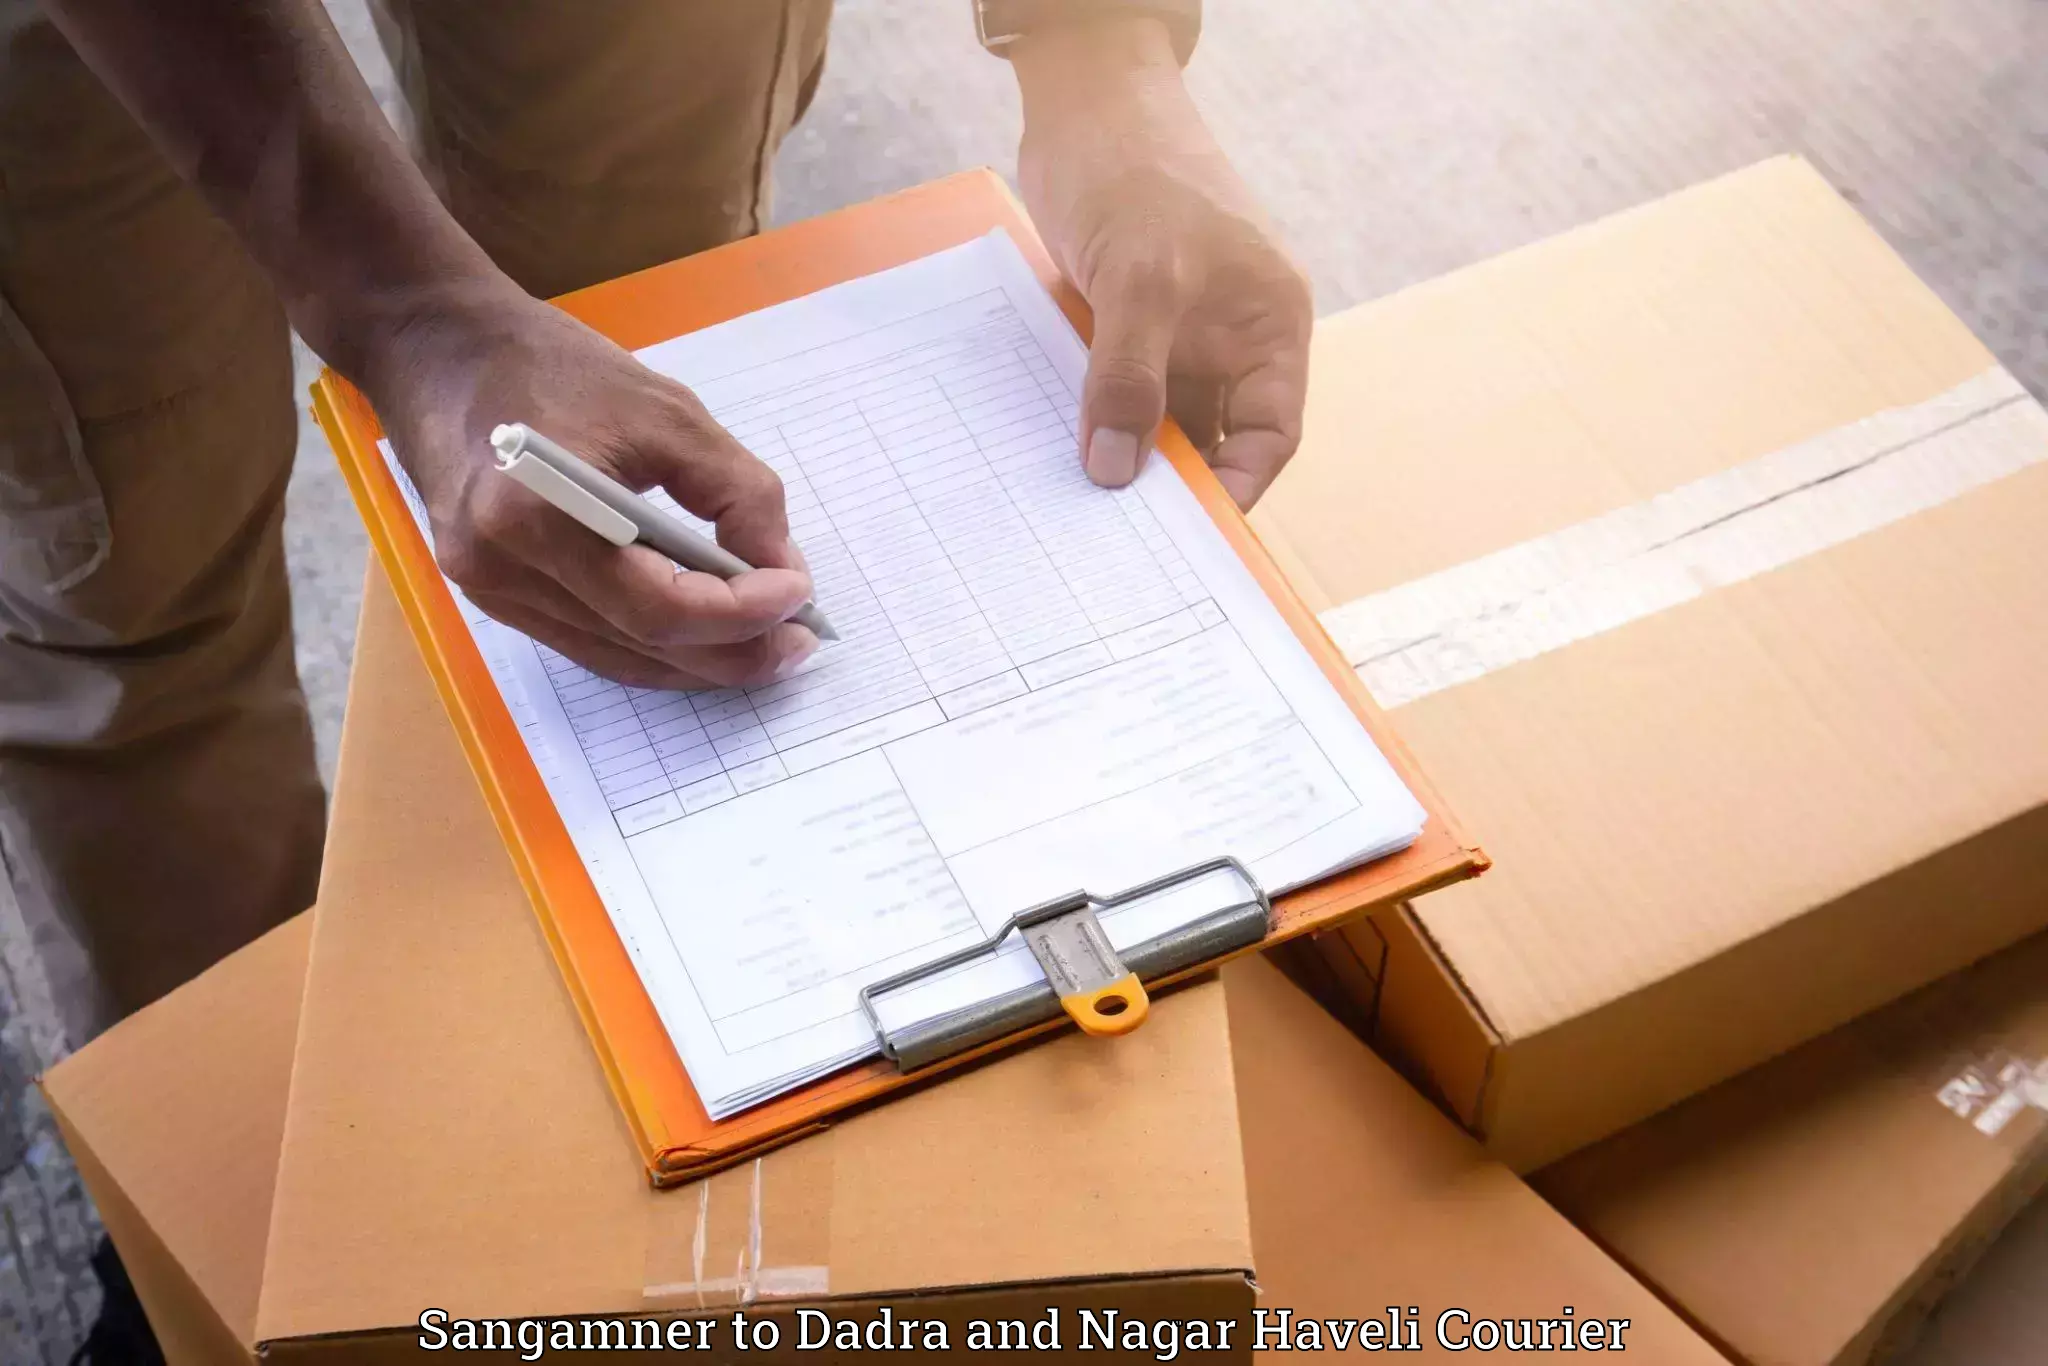 Professional moving assistance Sangamner to Dadra and Nagar Haveli